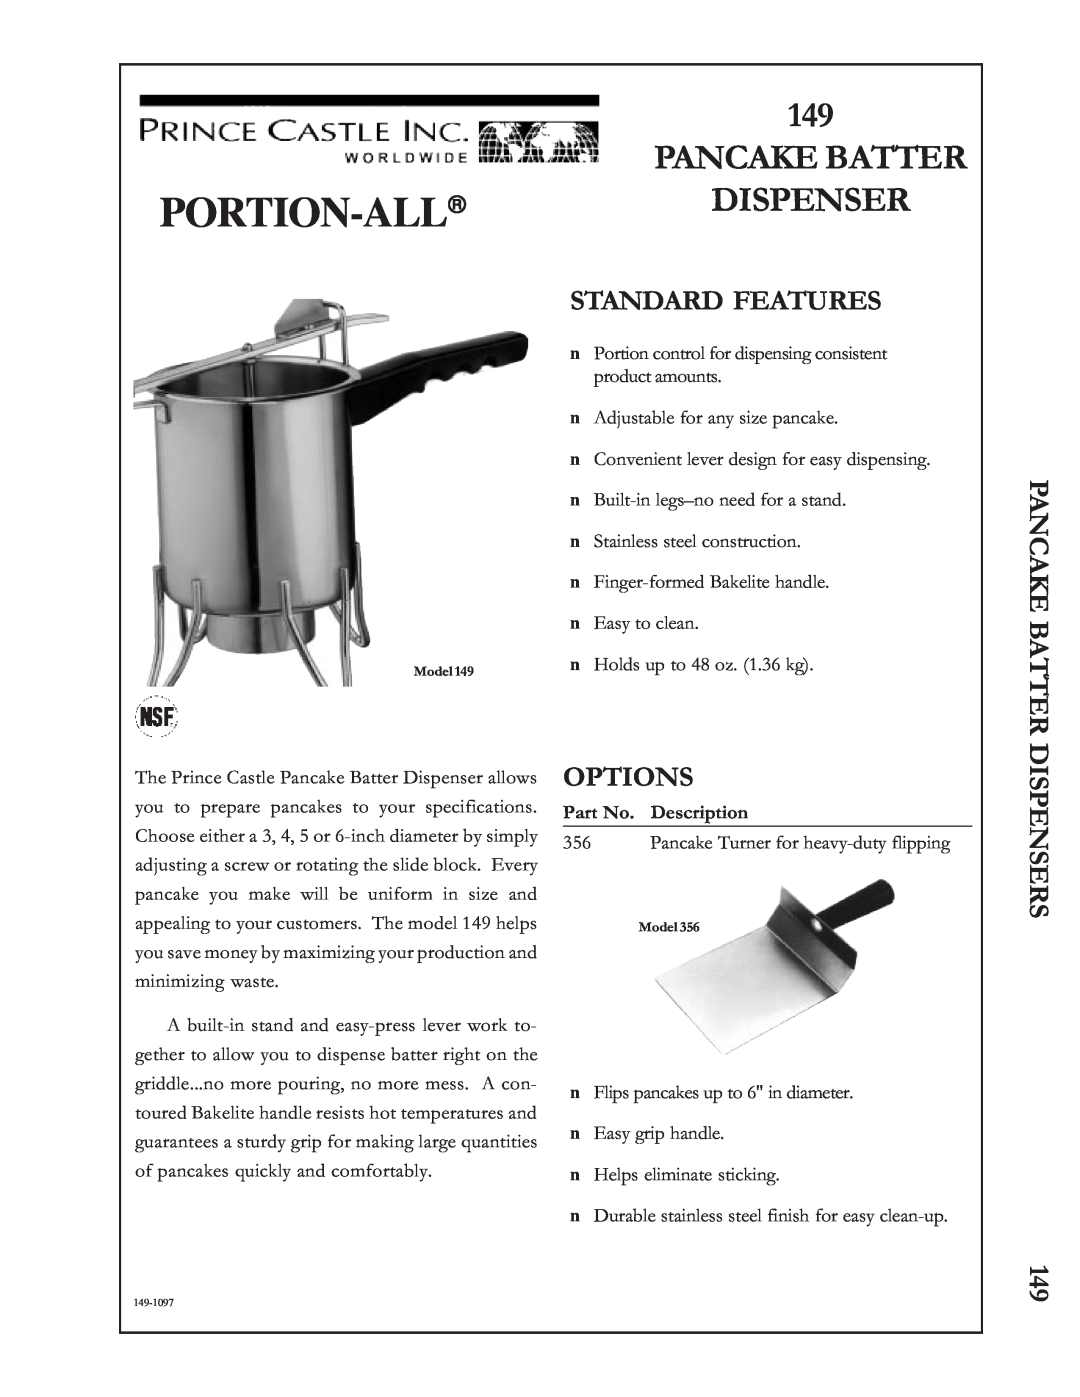 Prince Castle 149 specifications Standard Features, Options, Pancake Batter Dispensers, PORTION-ALLâDISPENSER 